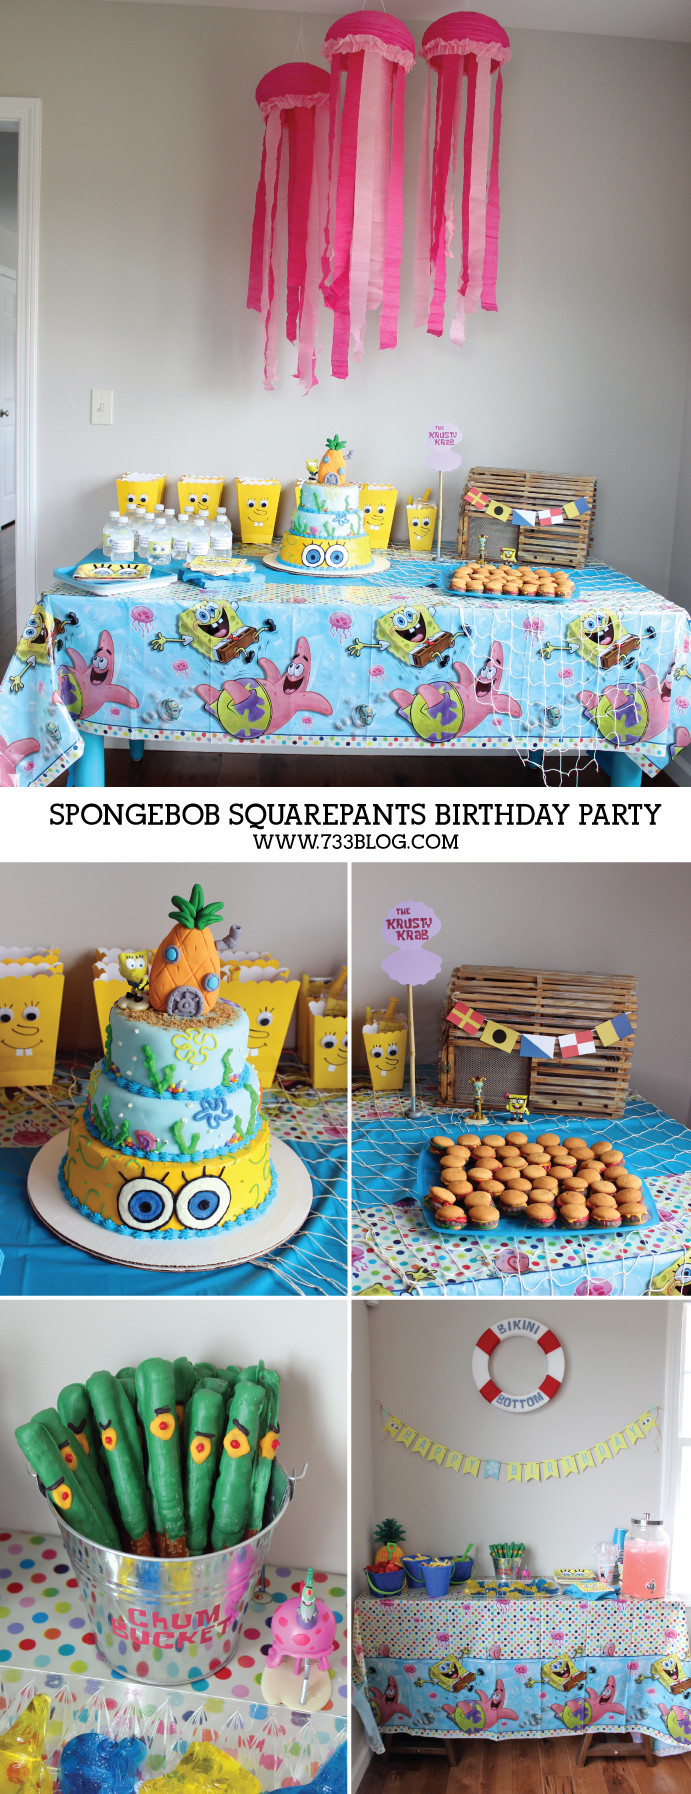 Spongebob Birthday Decorations
 Spongebob Squarepants Birthday Party Inspiration Made Simple